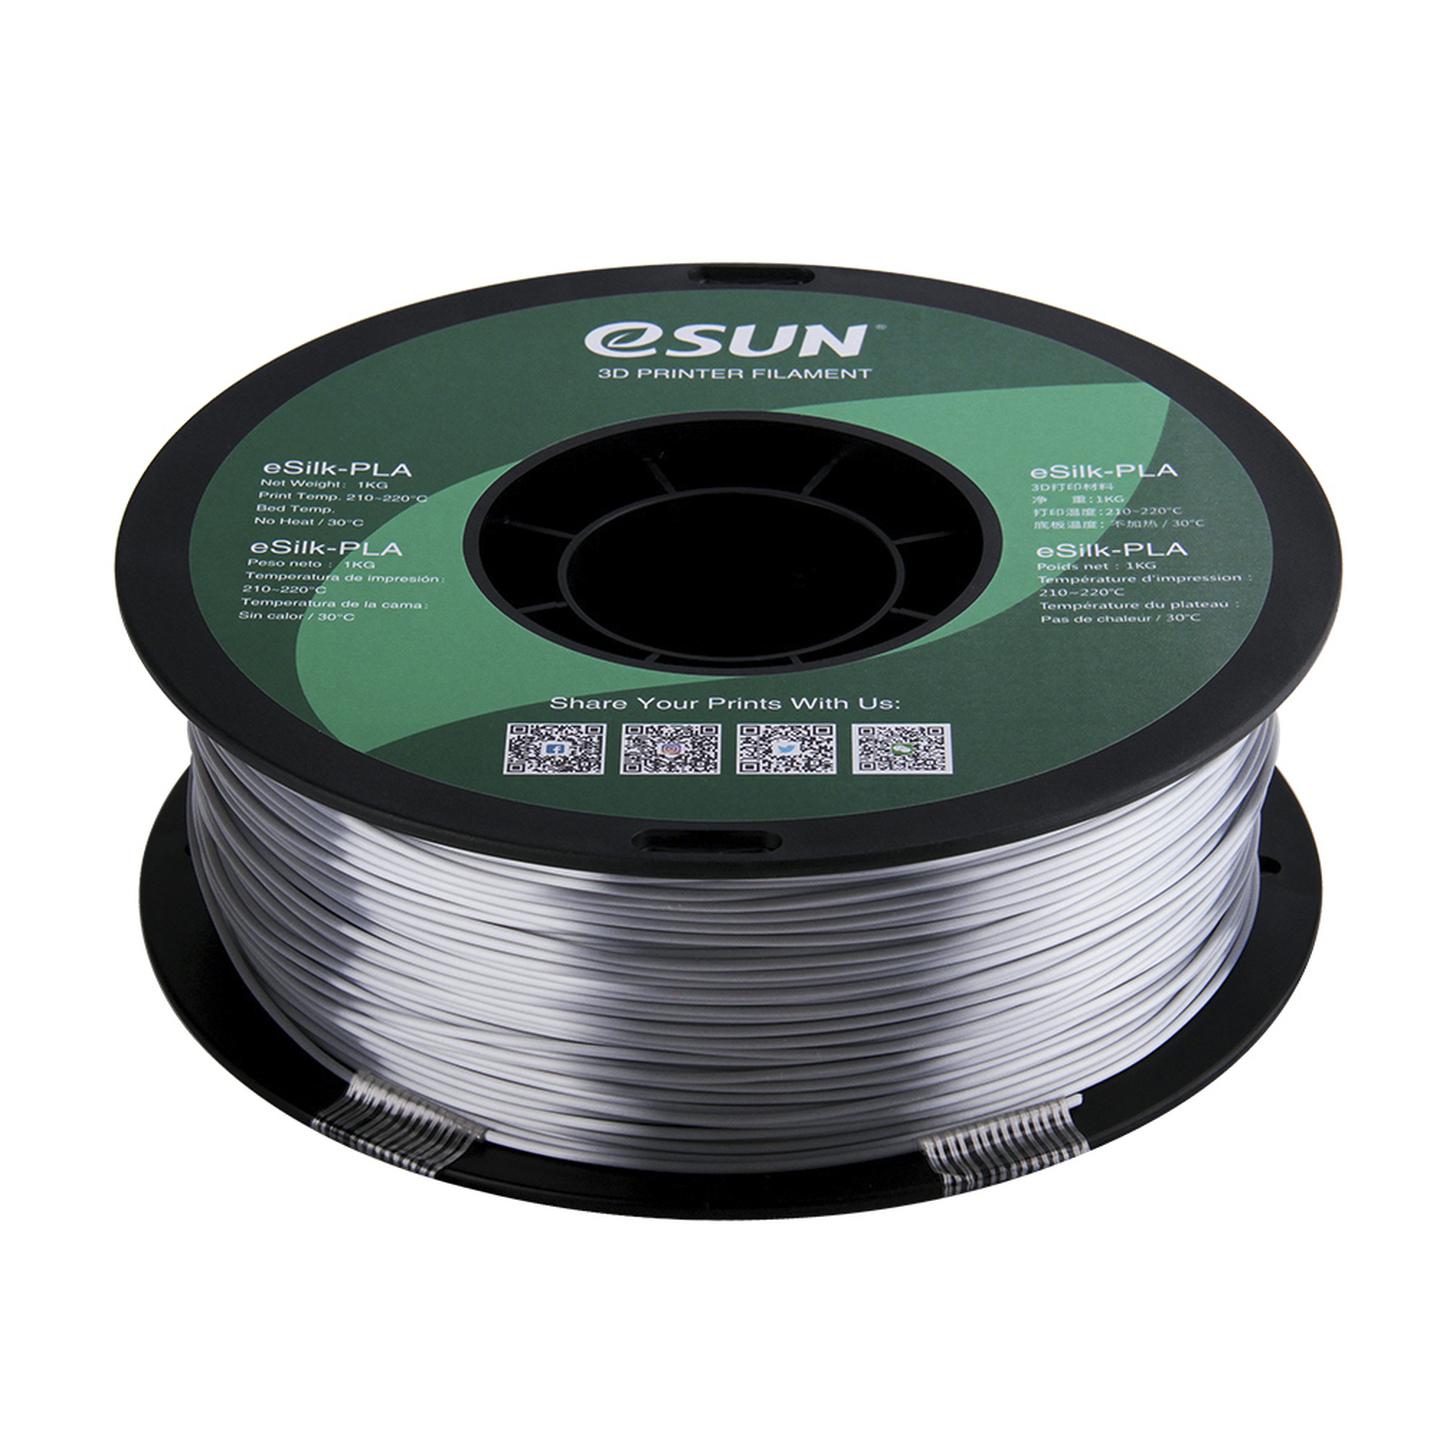 eSUN Silver eSilk Filament 1kg 1.75mm